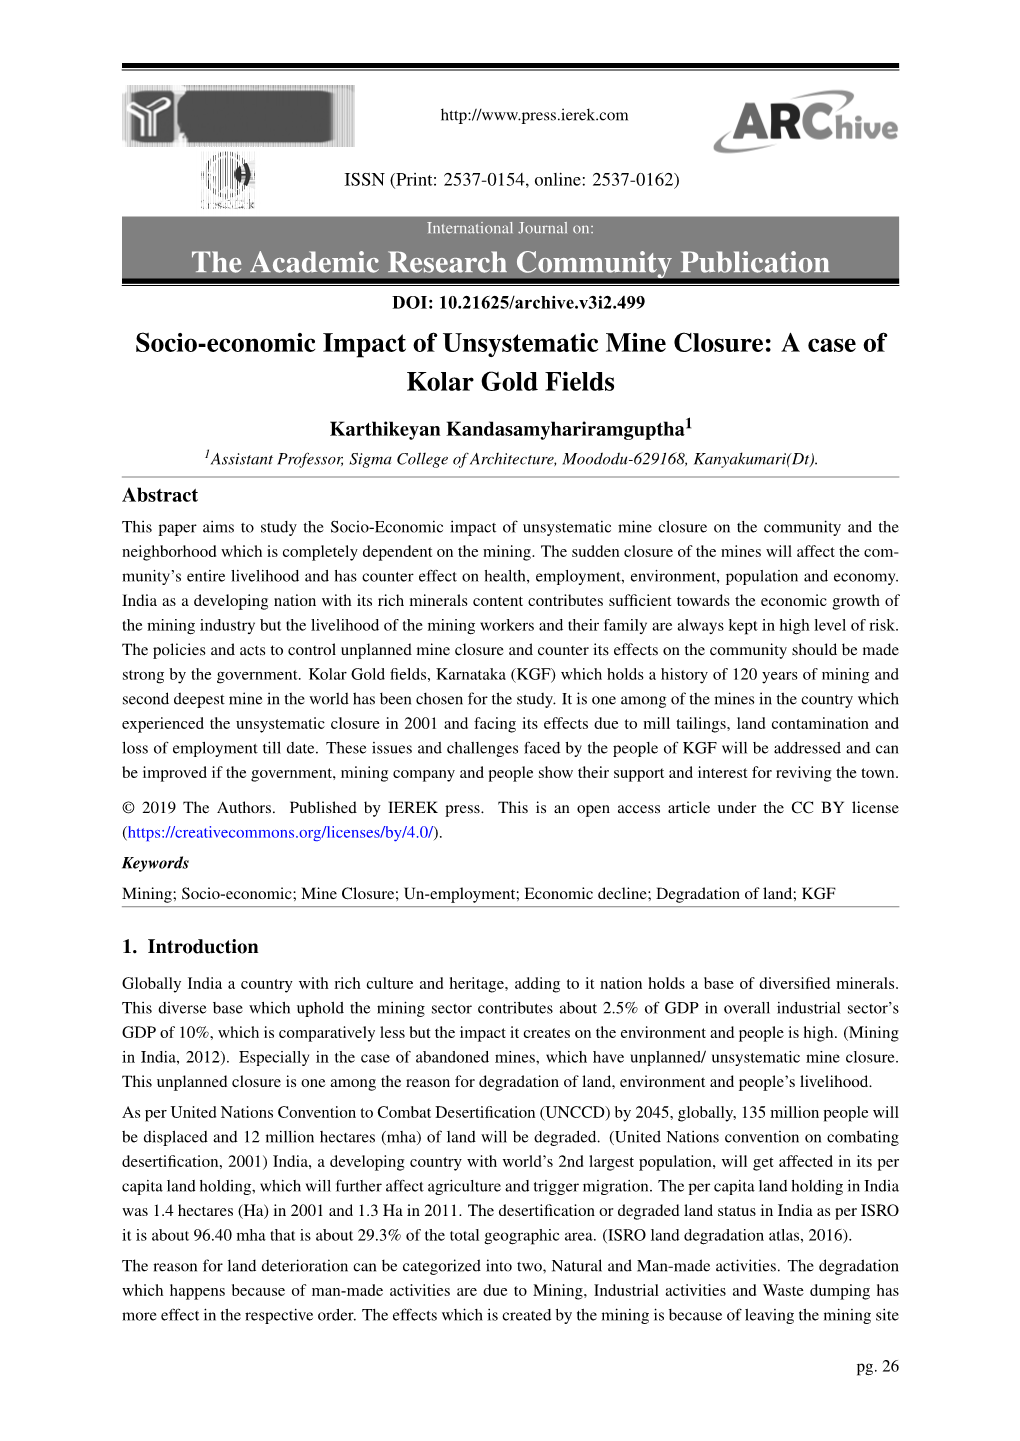 Research Community Publication DOI: 10.21625/Archive.V3i2.499 Socio-Economic Impact of Unsystematic Mine Closure: a Case of Kolar Gold Fields